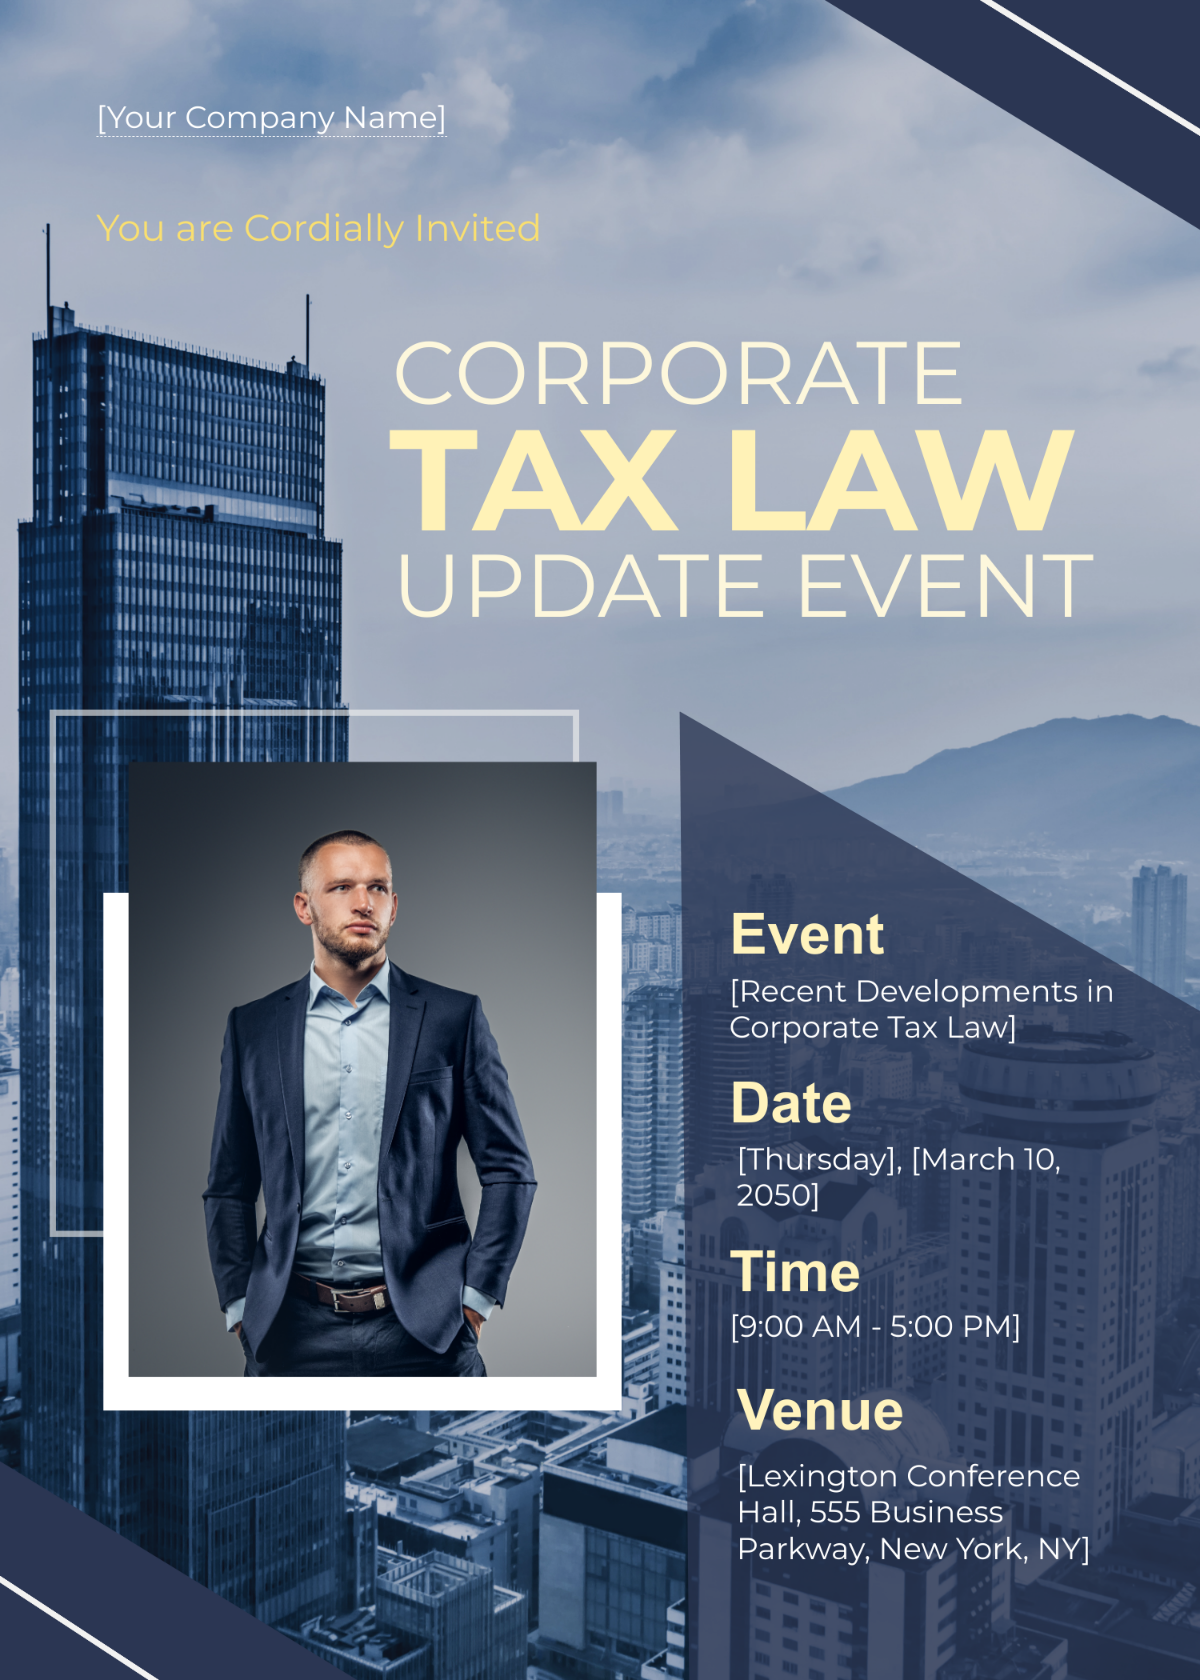 Corporate Tax Law Update Event Invitation Card